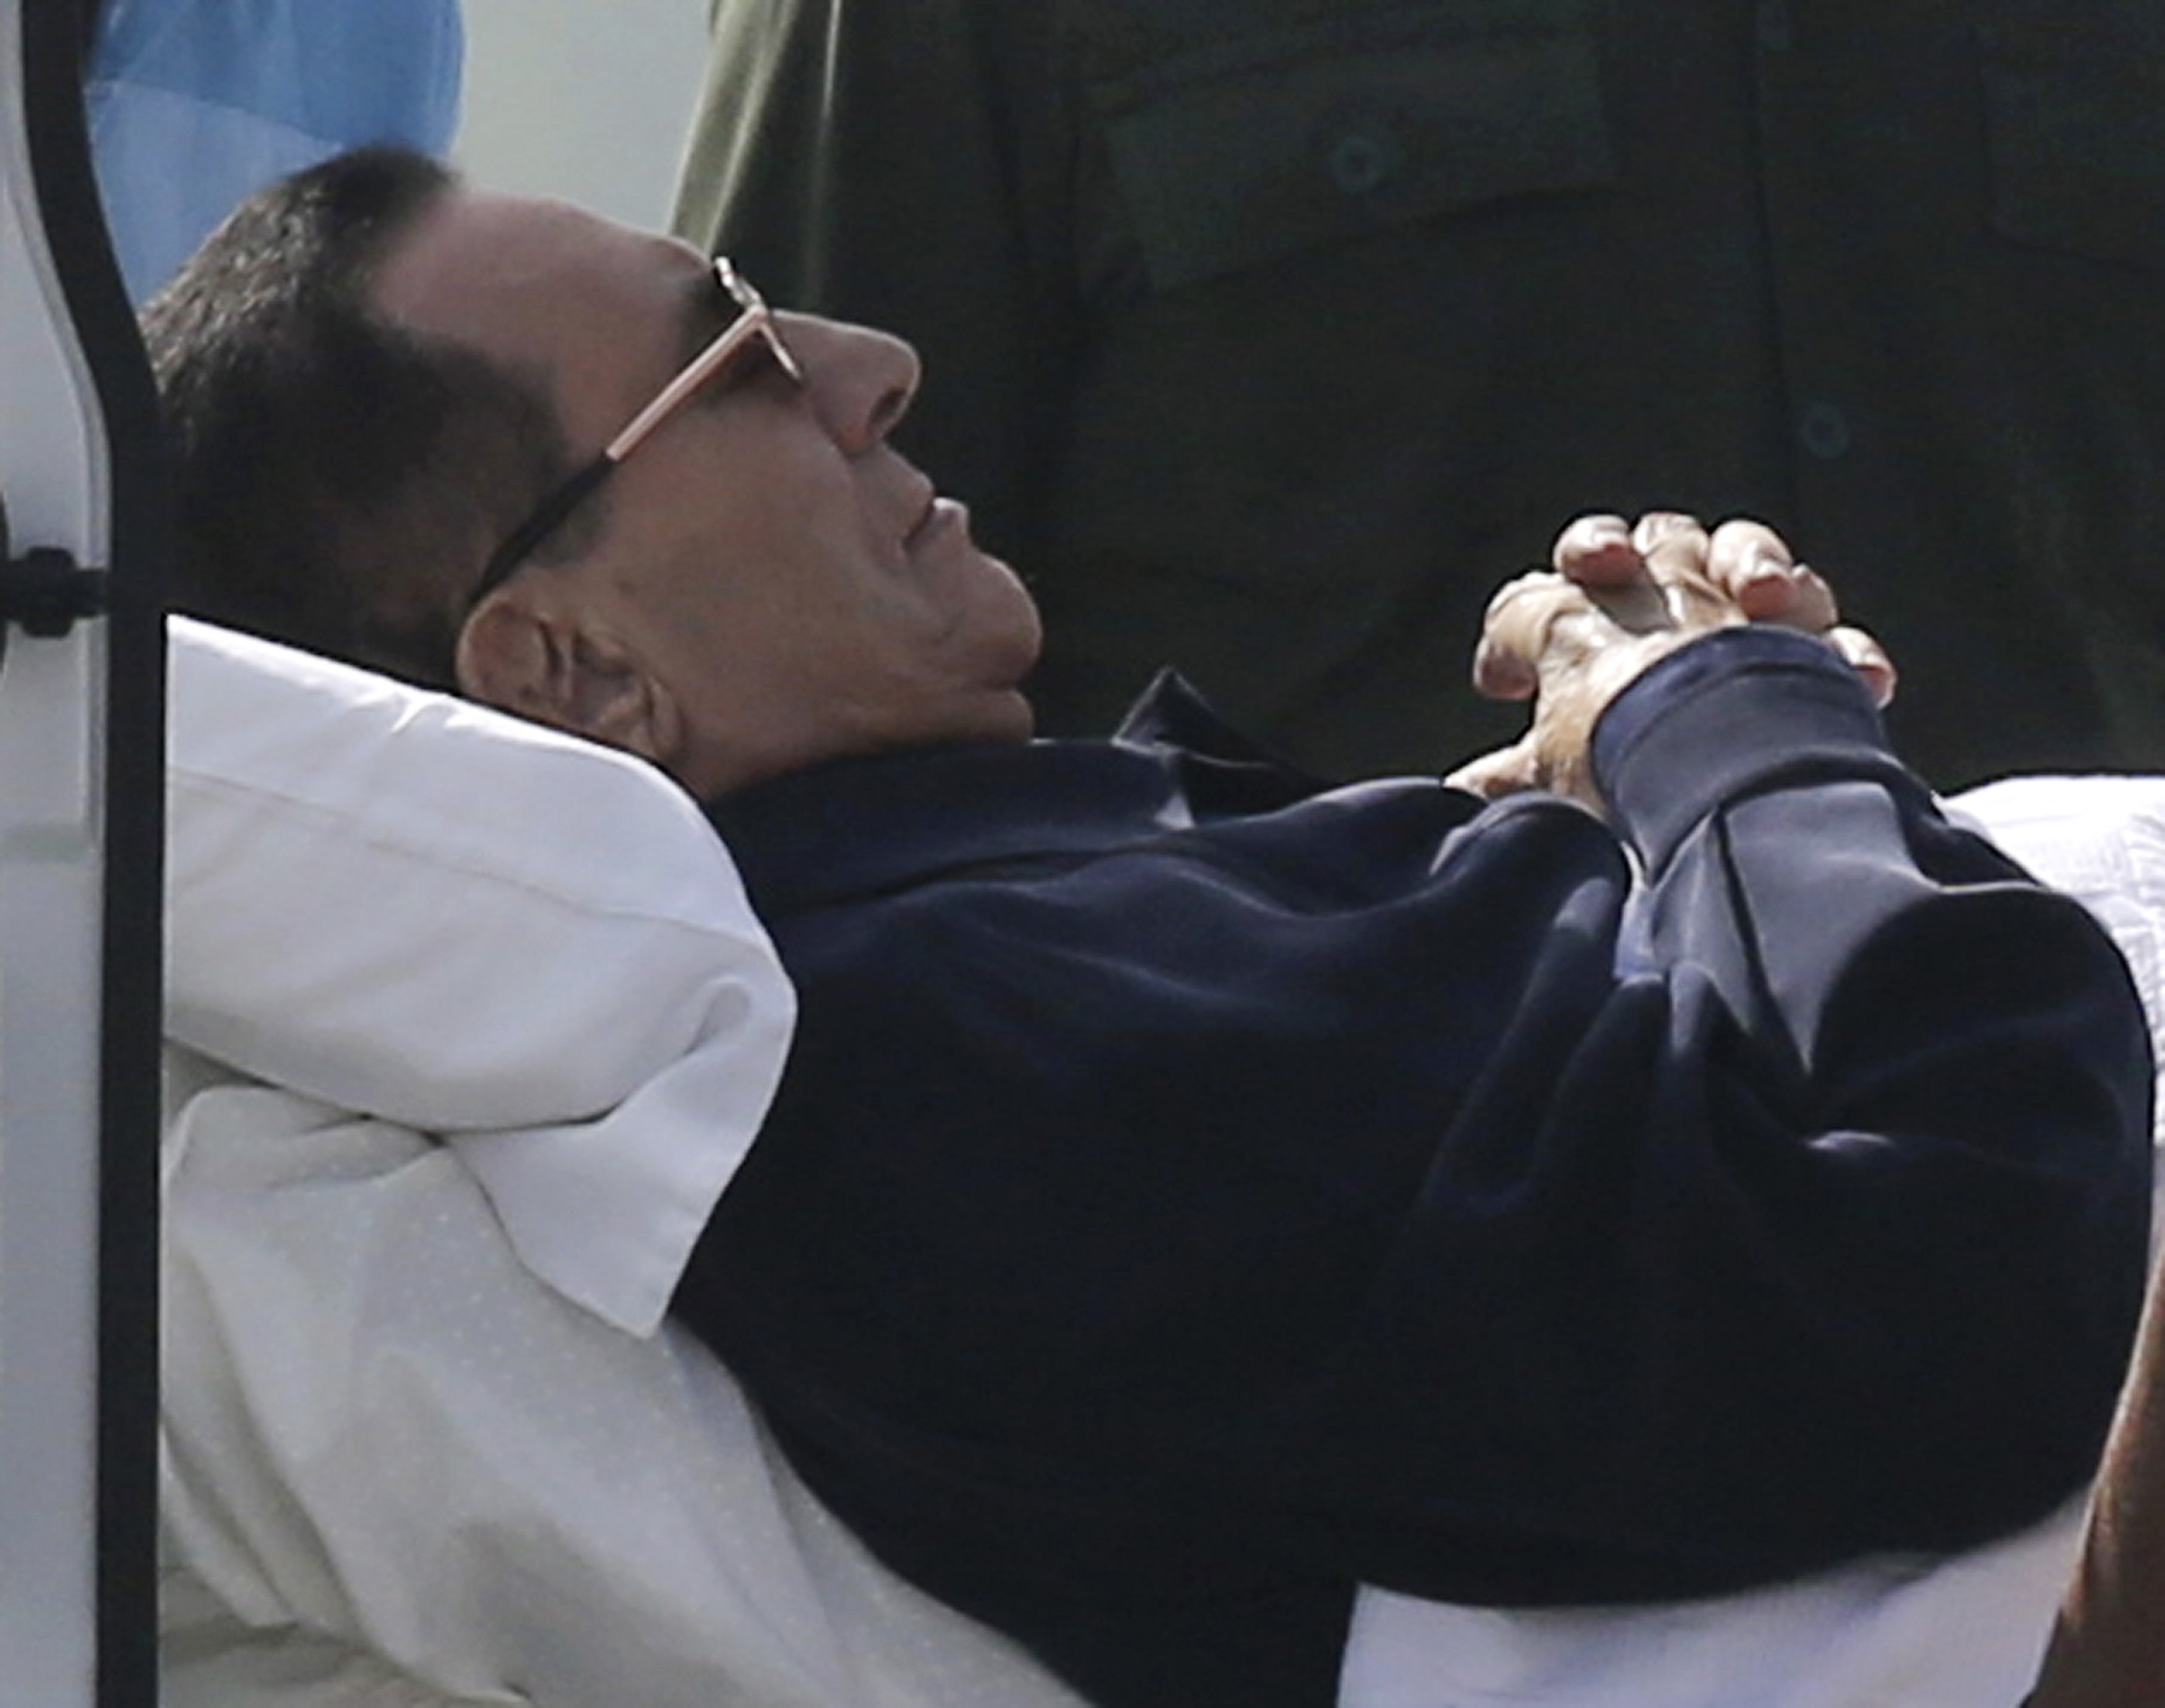 UPDATE - Mubarak sentence over killing protesters postponed to Nov 29